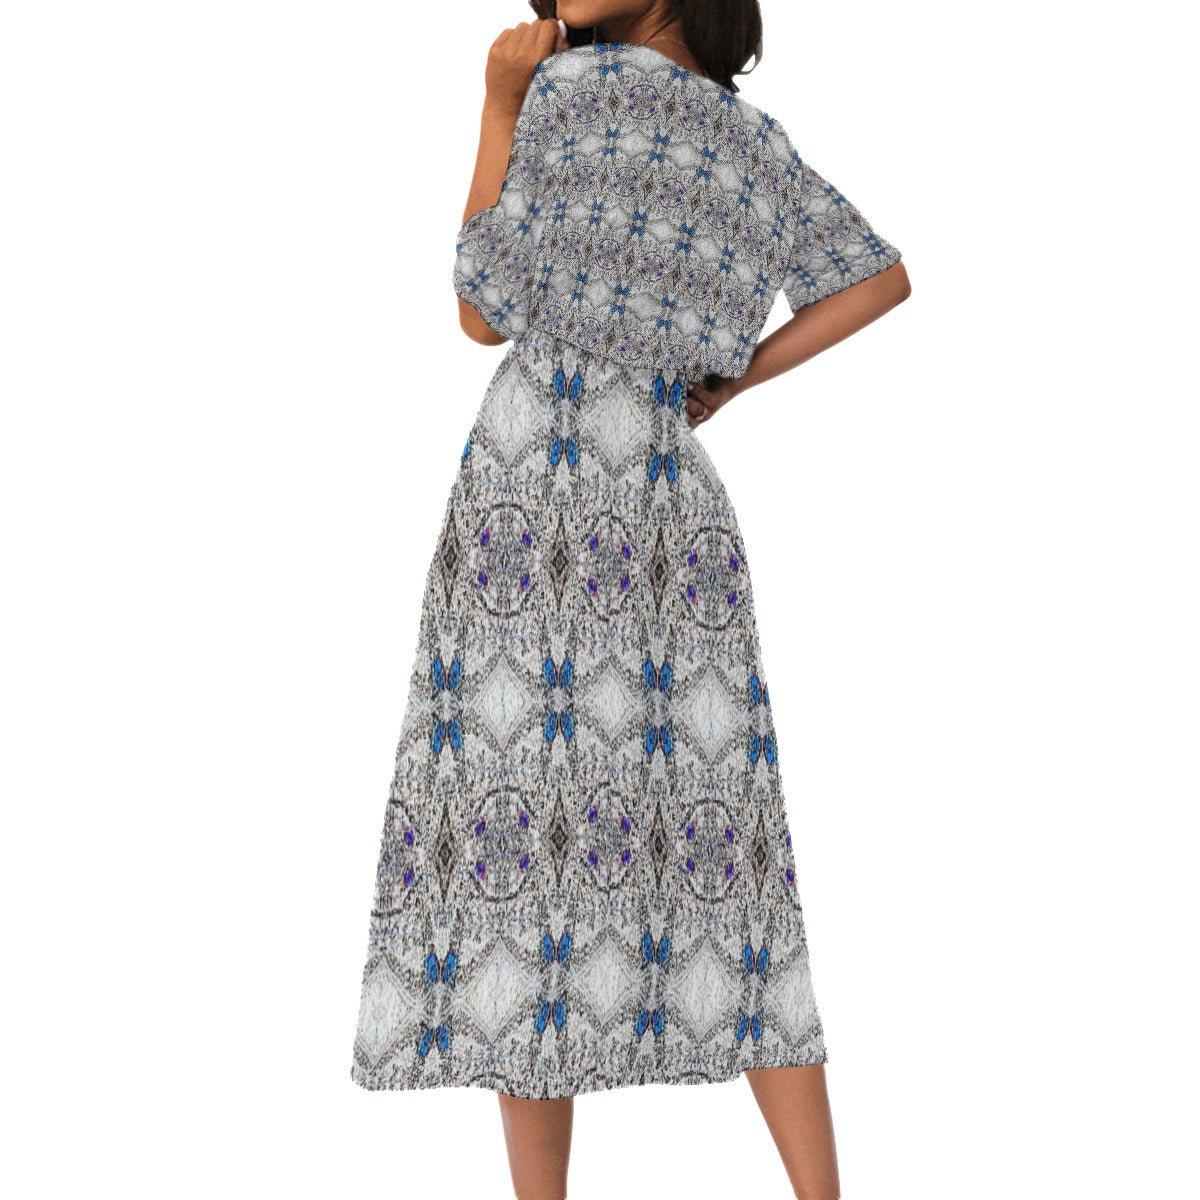 Liberace Crystal Cape Pattern Print Dress